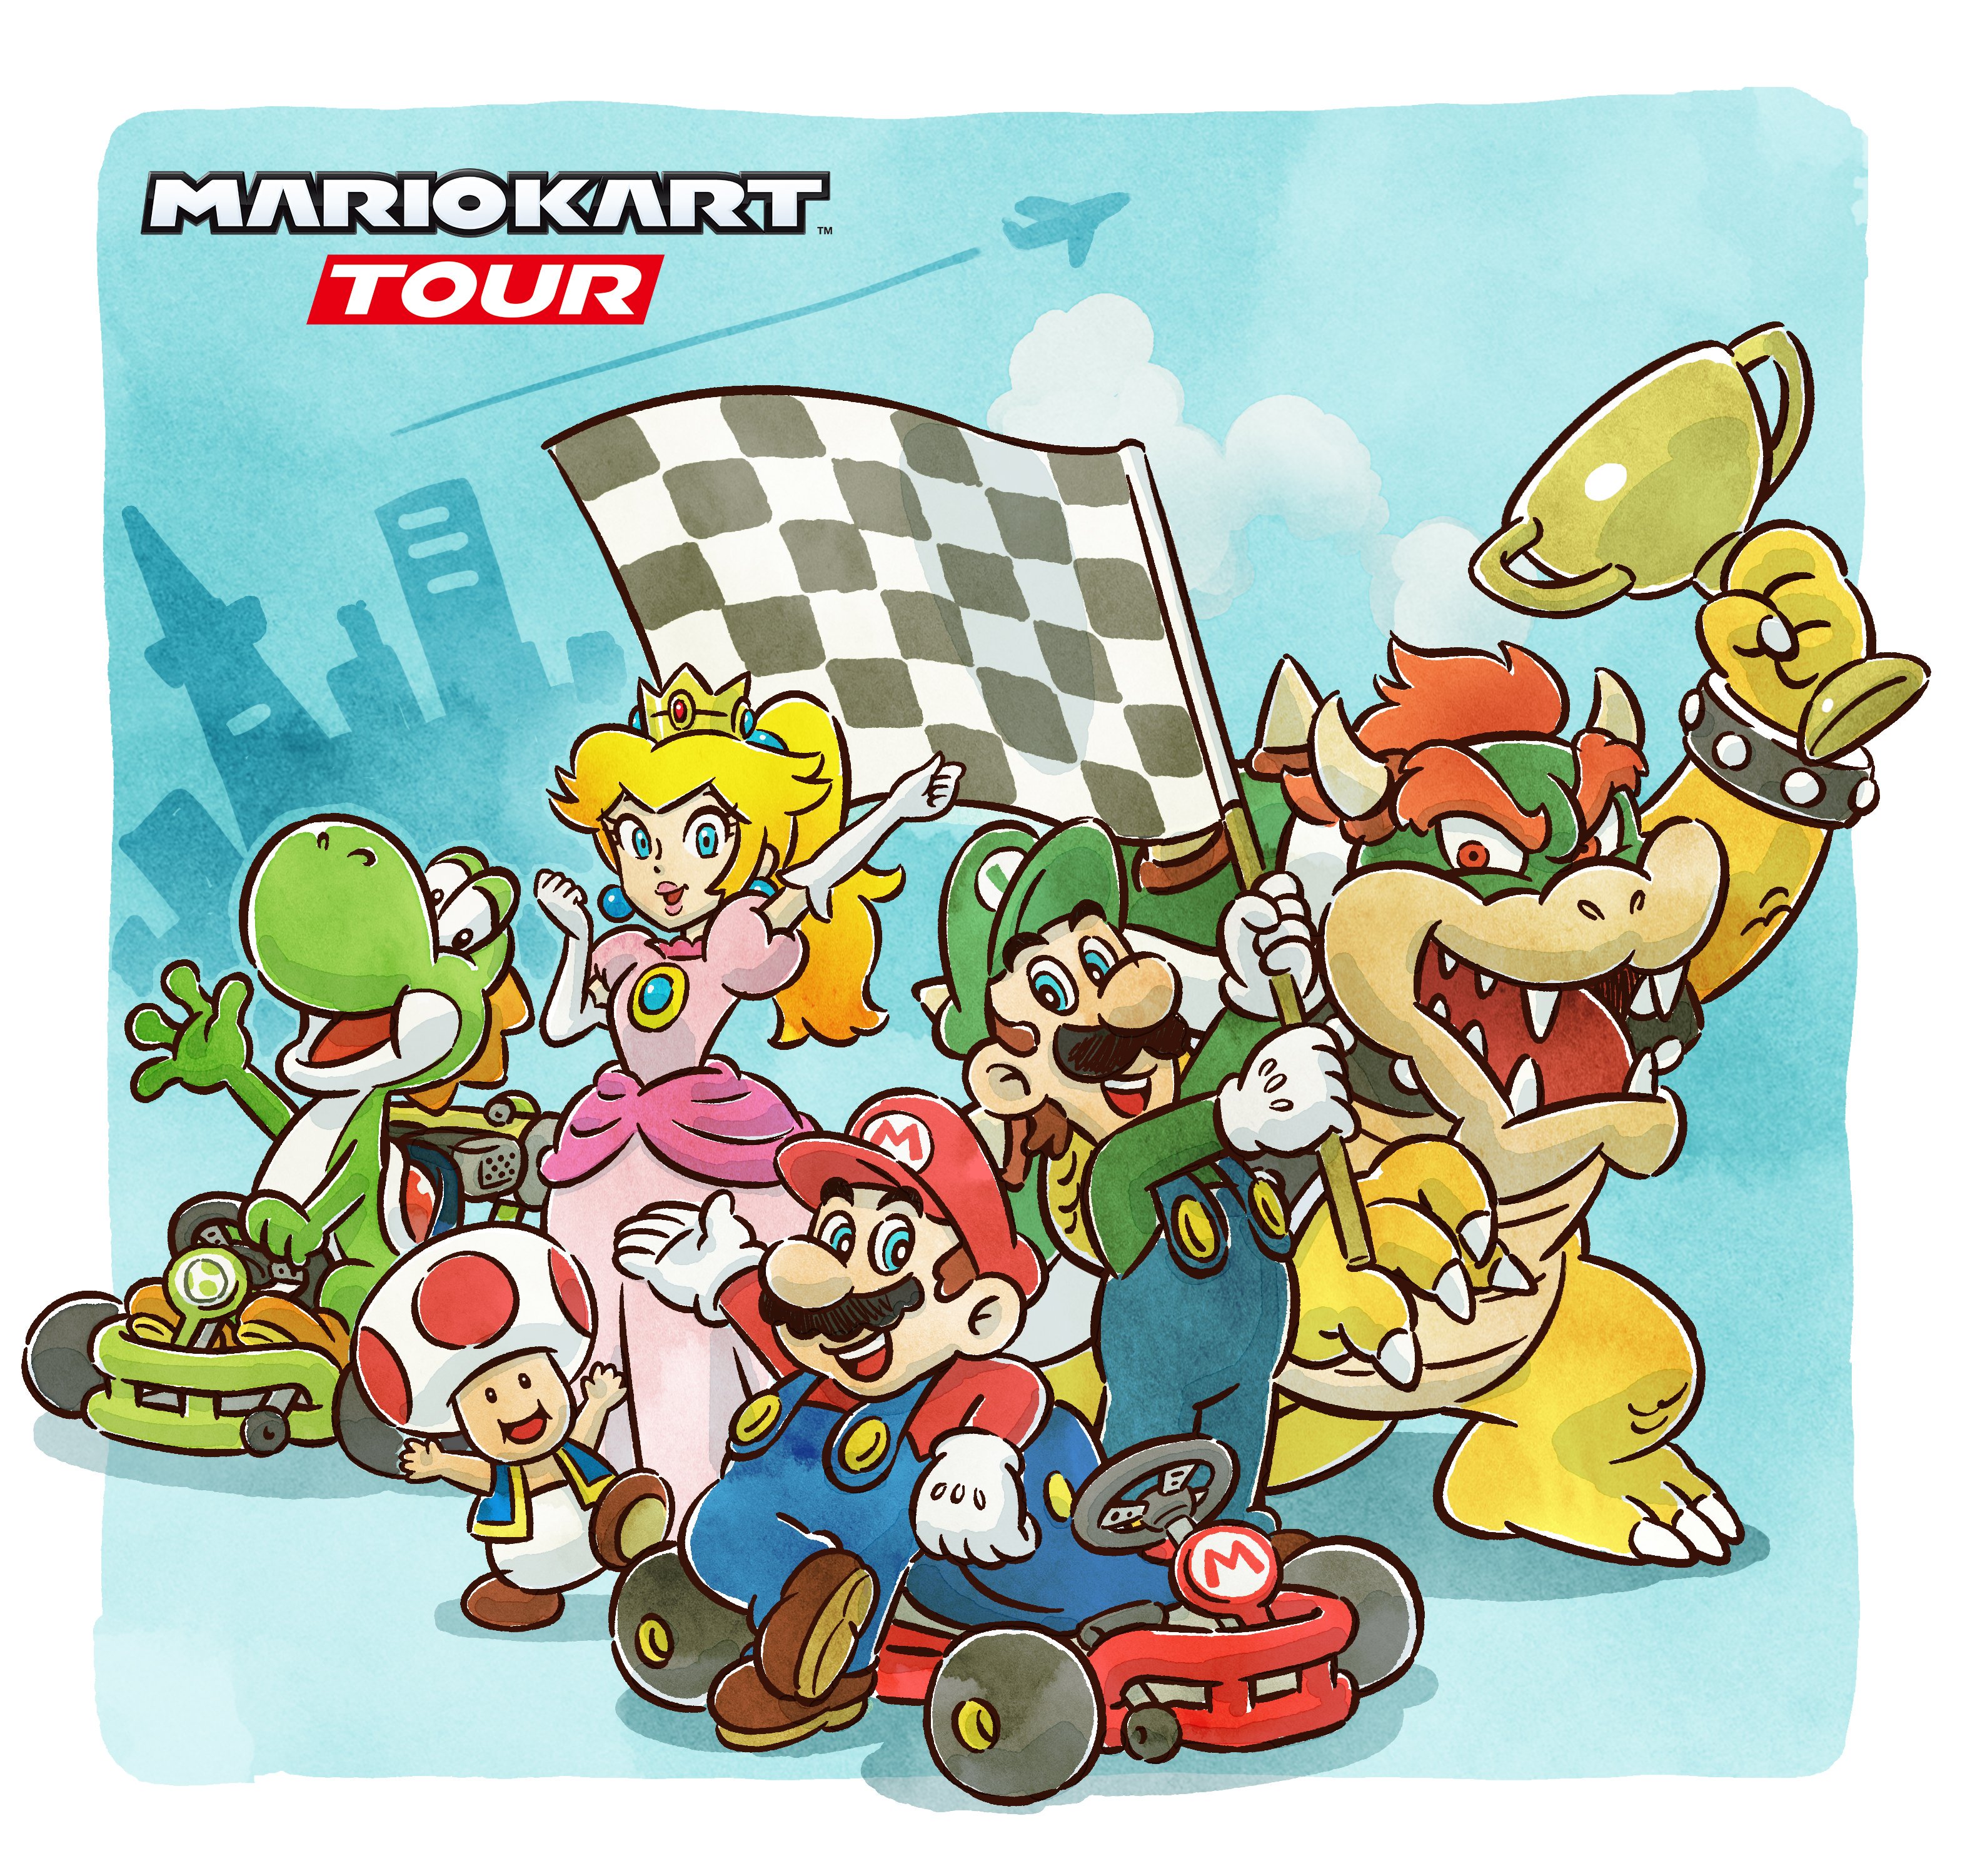 Mario_Kart_Tour_launch_artwork.jpg